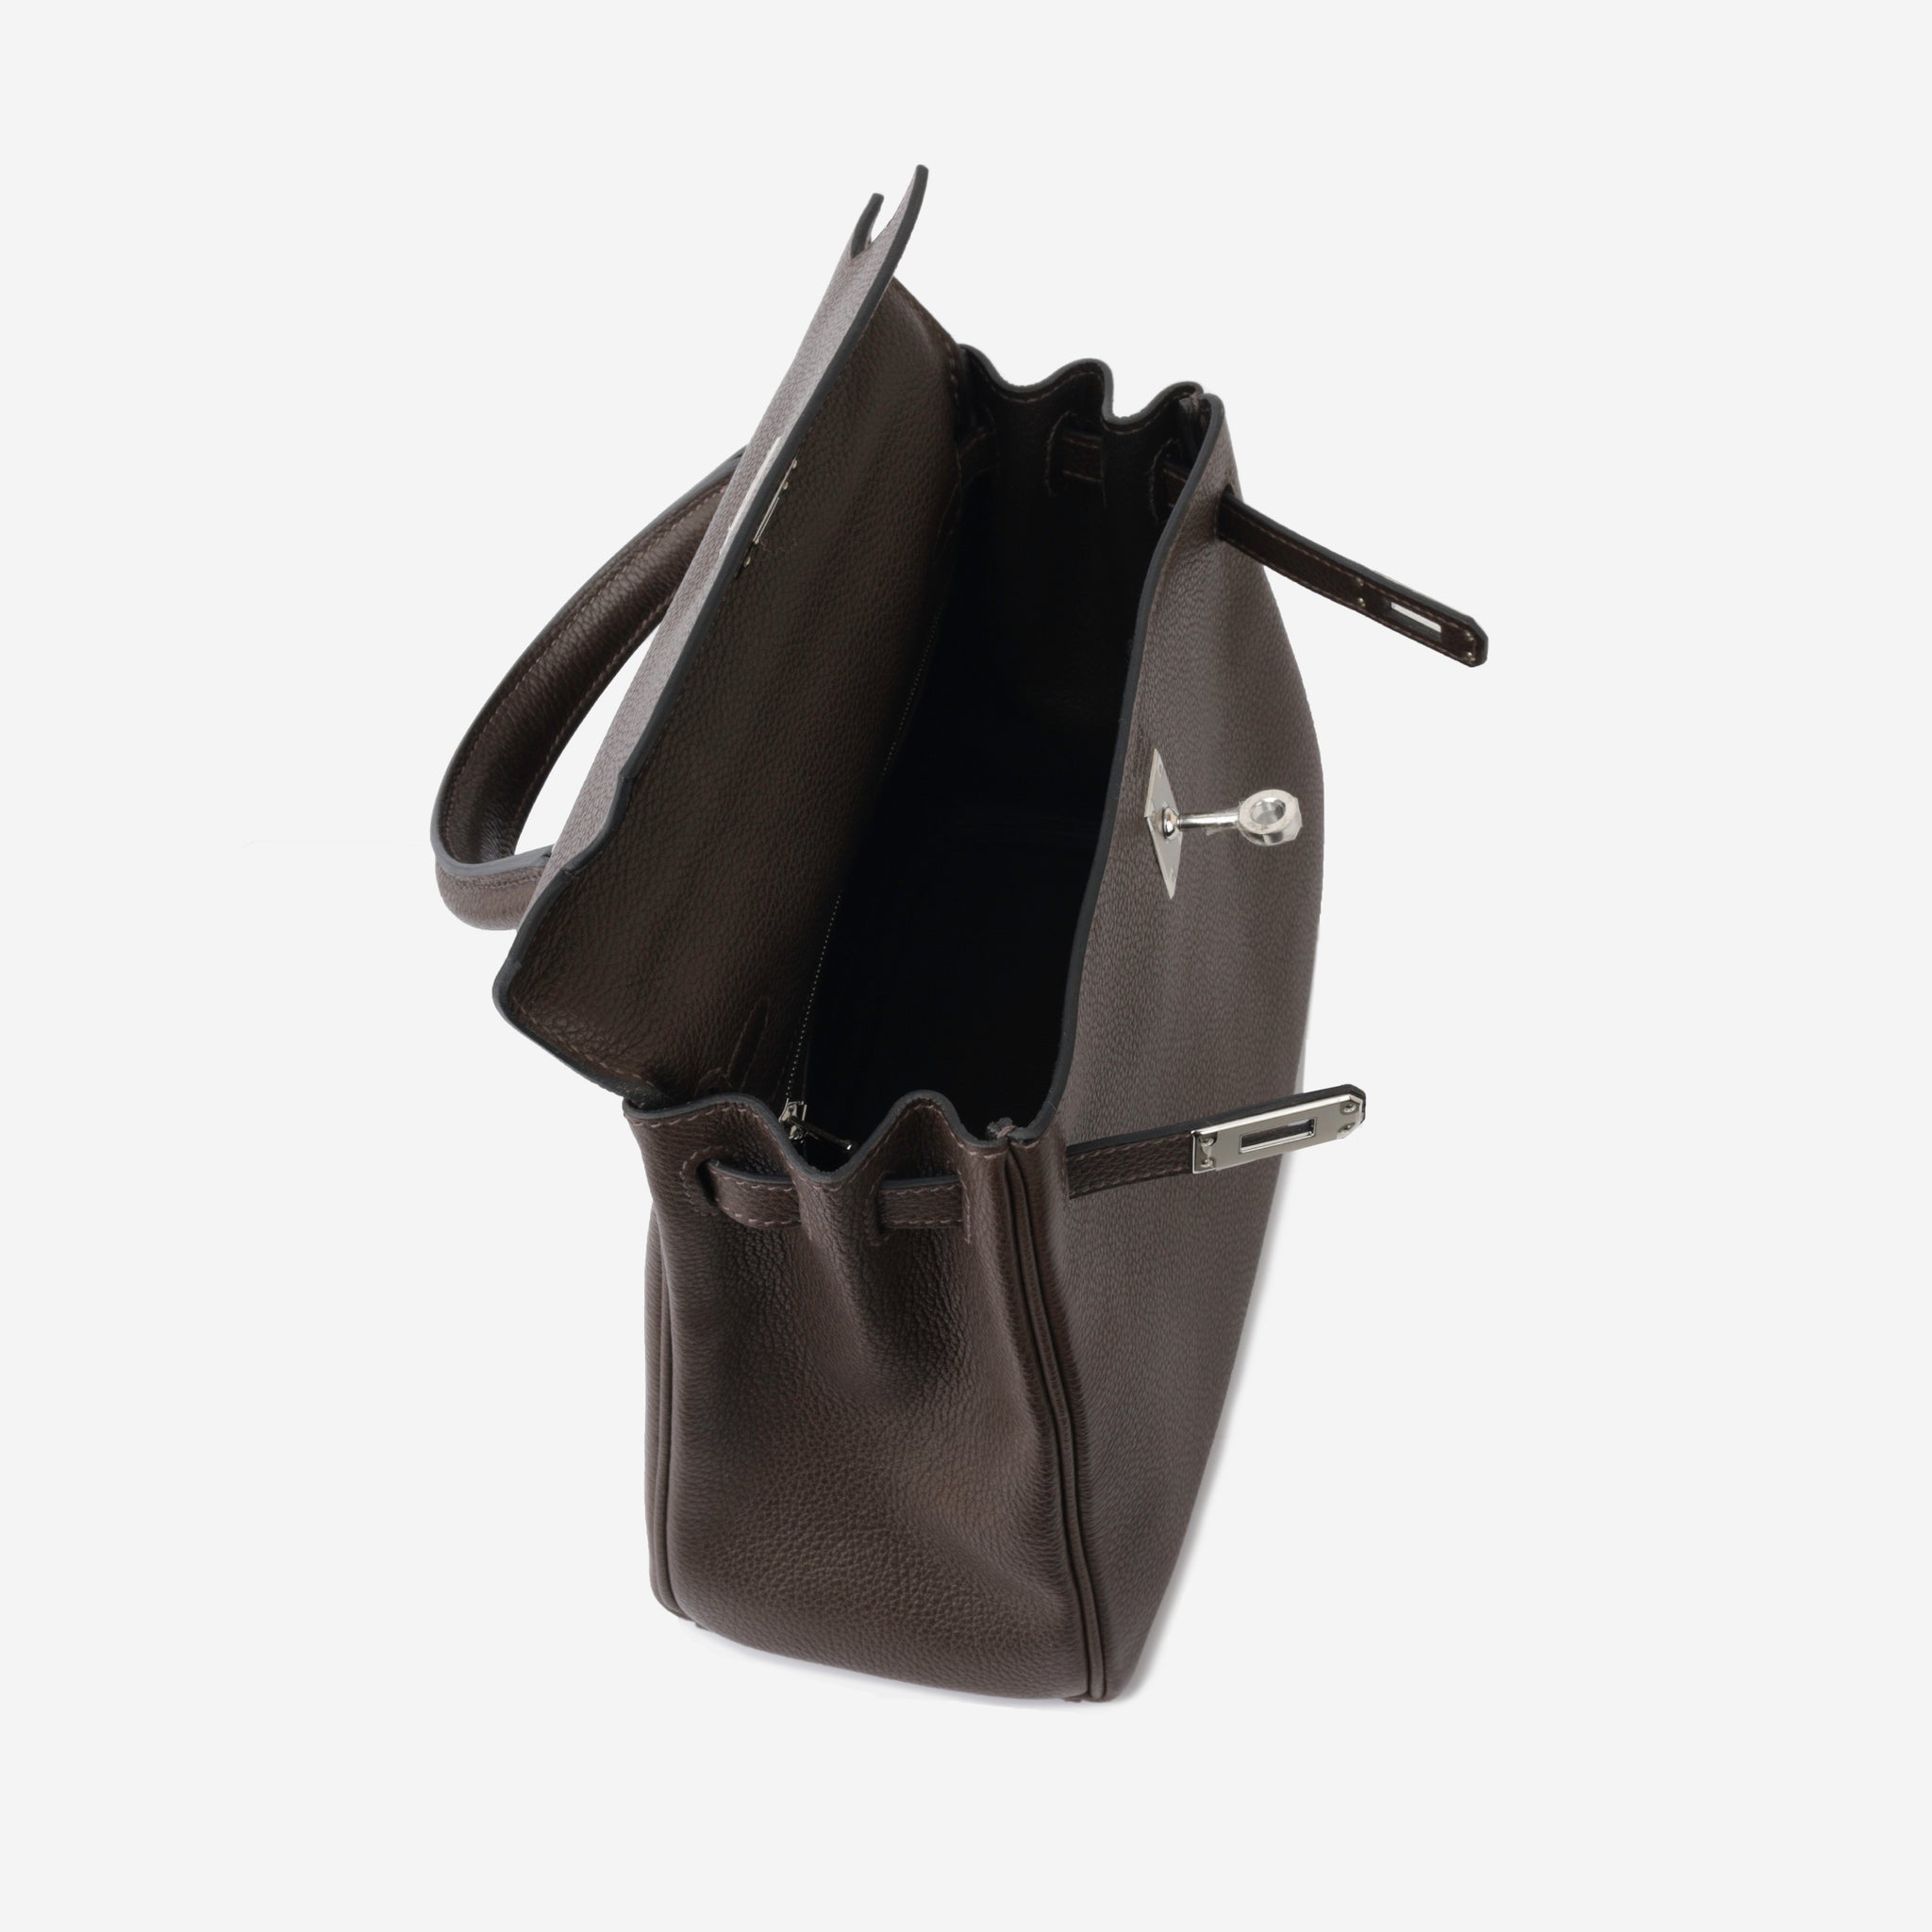 Hermès Kelly Fauve Barenia 25 Sellier Handbag